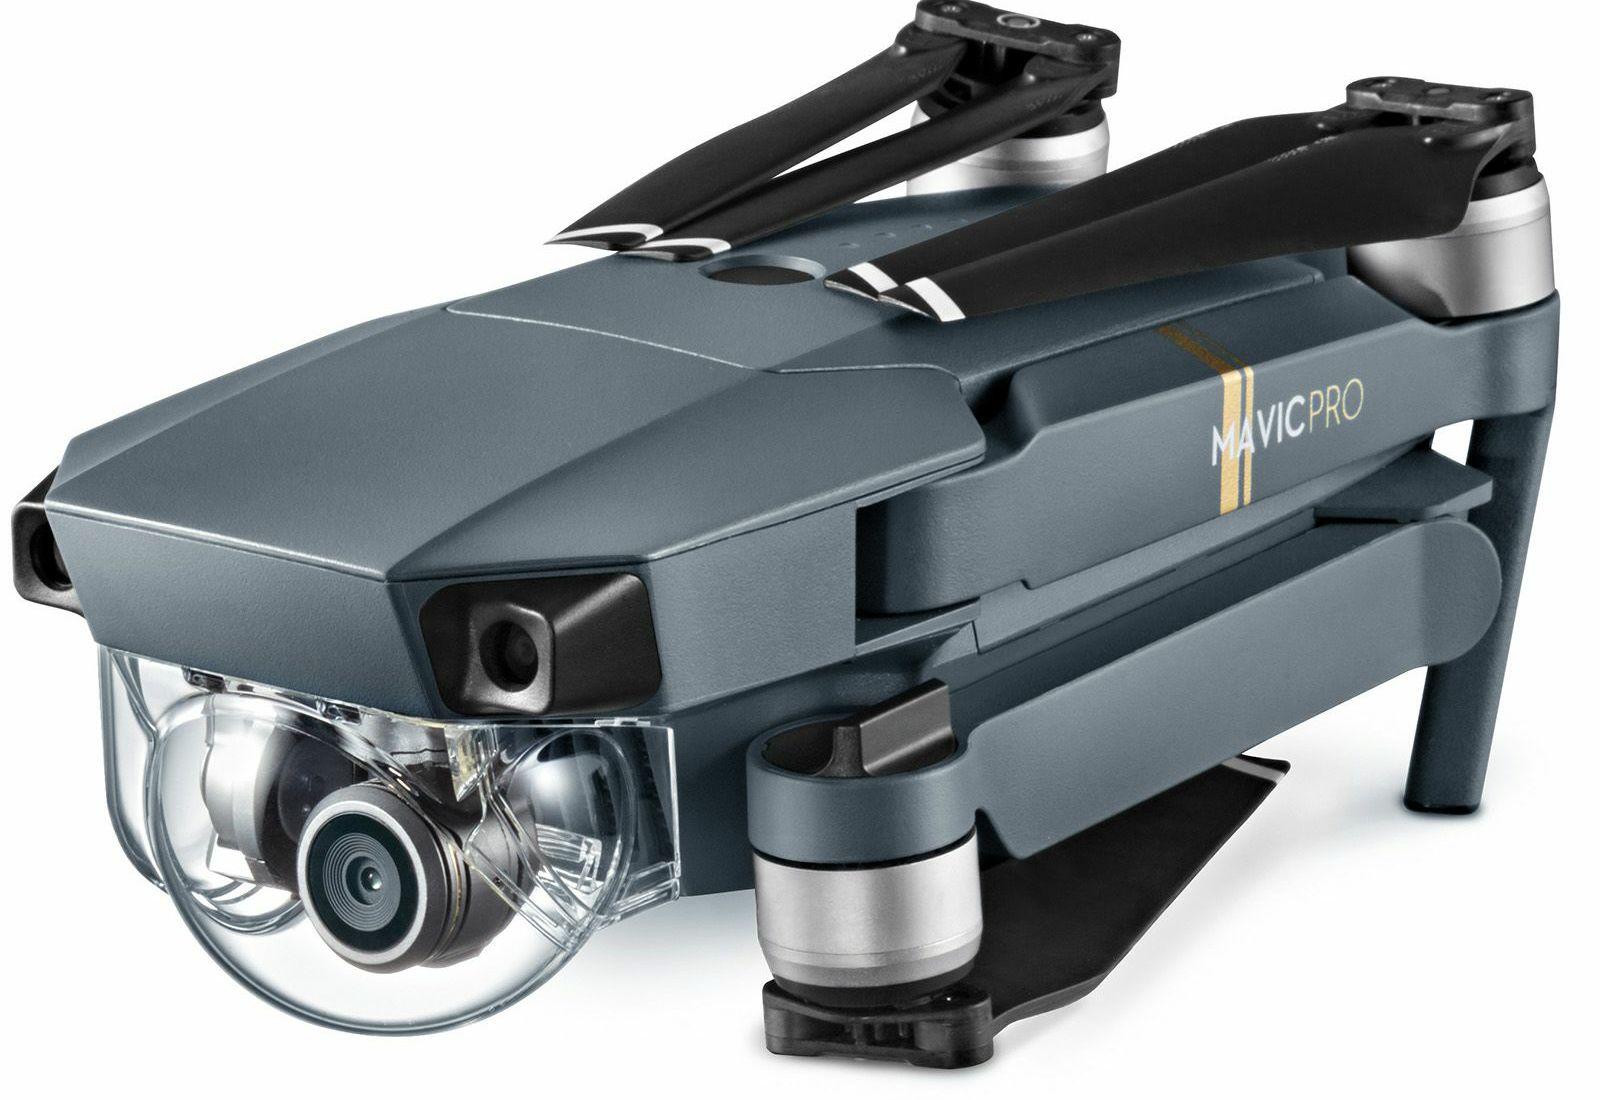 DJI Mavic Pro dron sklopivi quadcopter s 4K kamerom i gimbal stabilizatorom za snimanje iz zraka